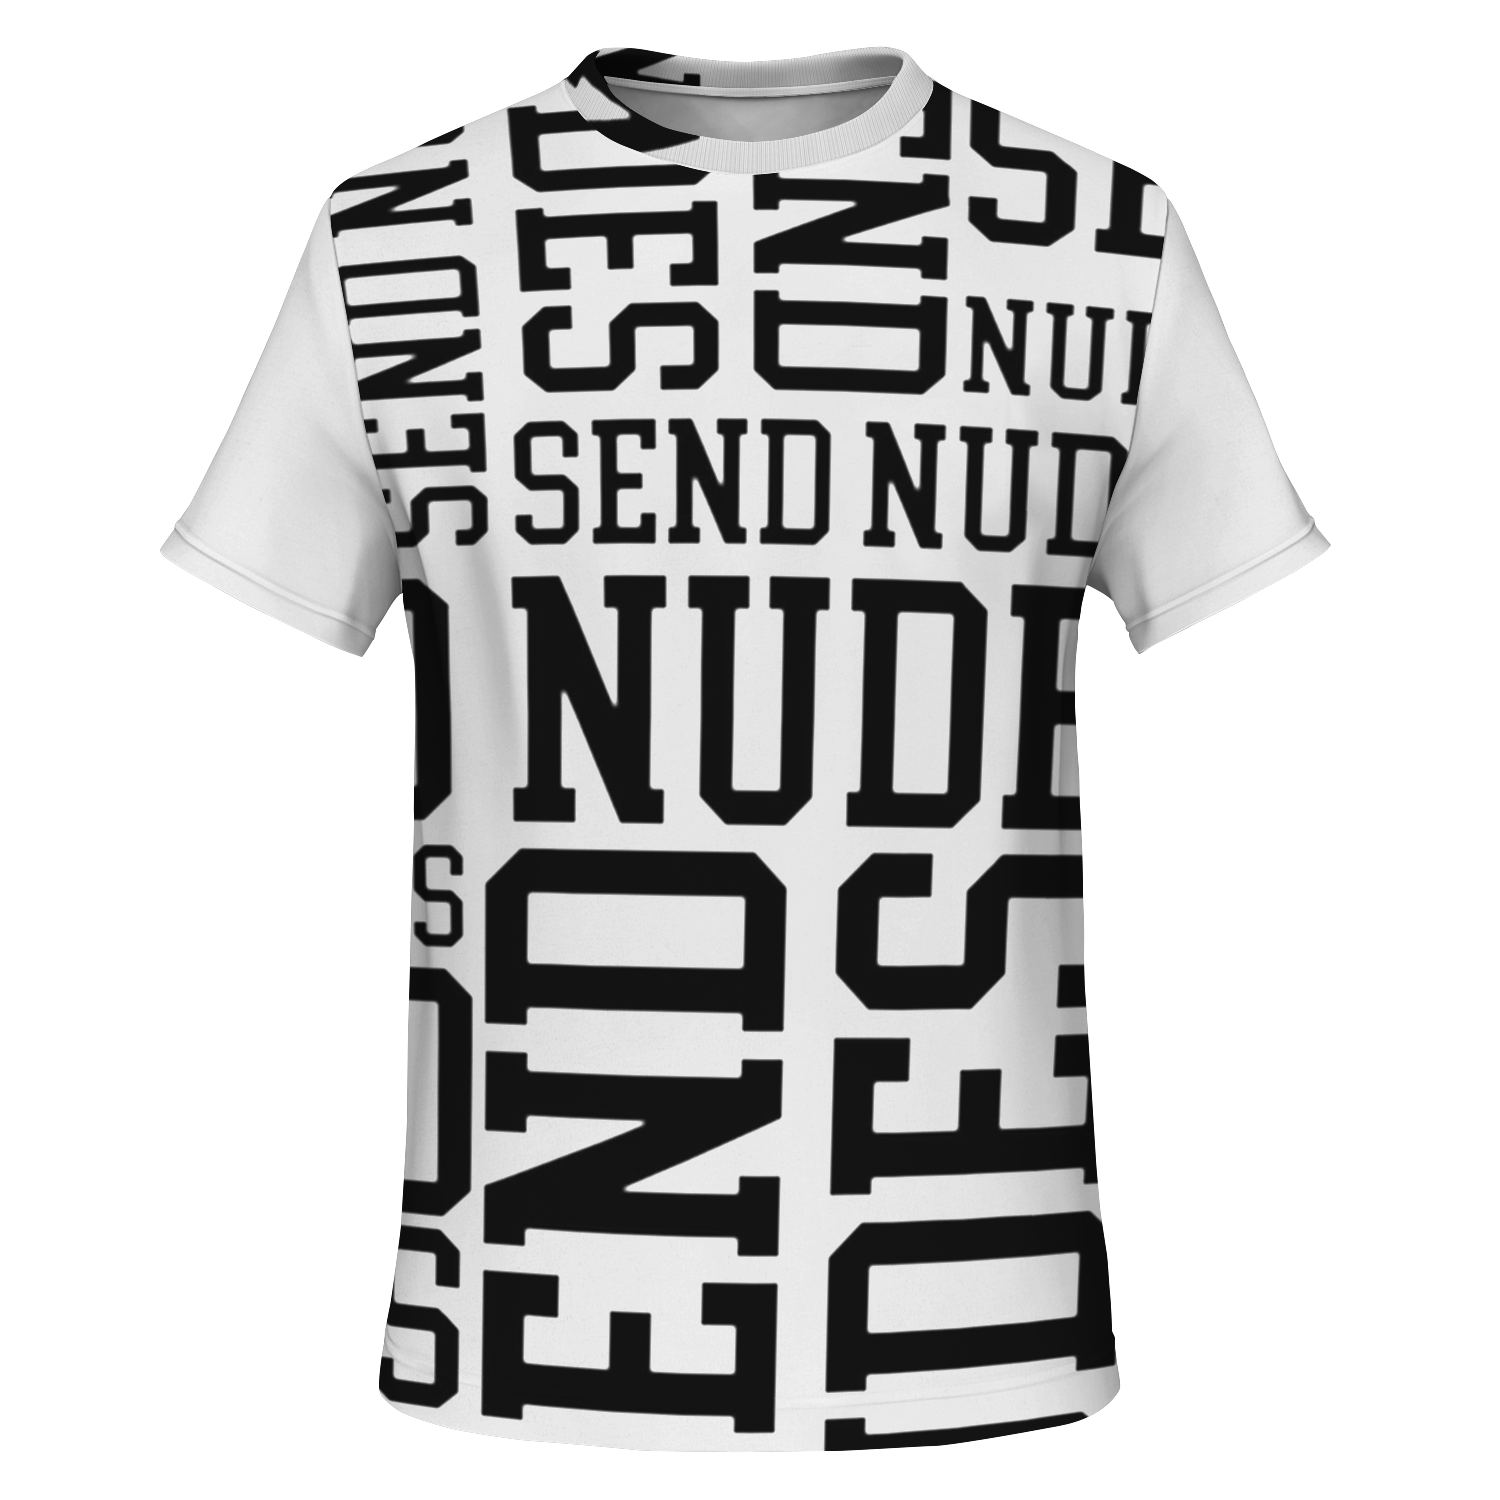 Send Nudes white PREMIUM t-shirt